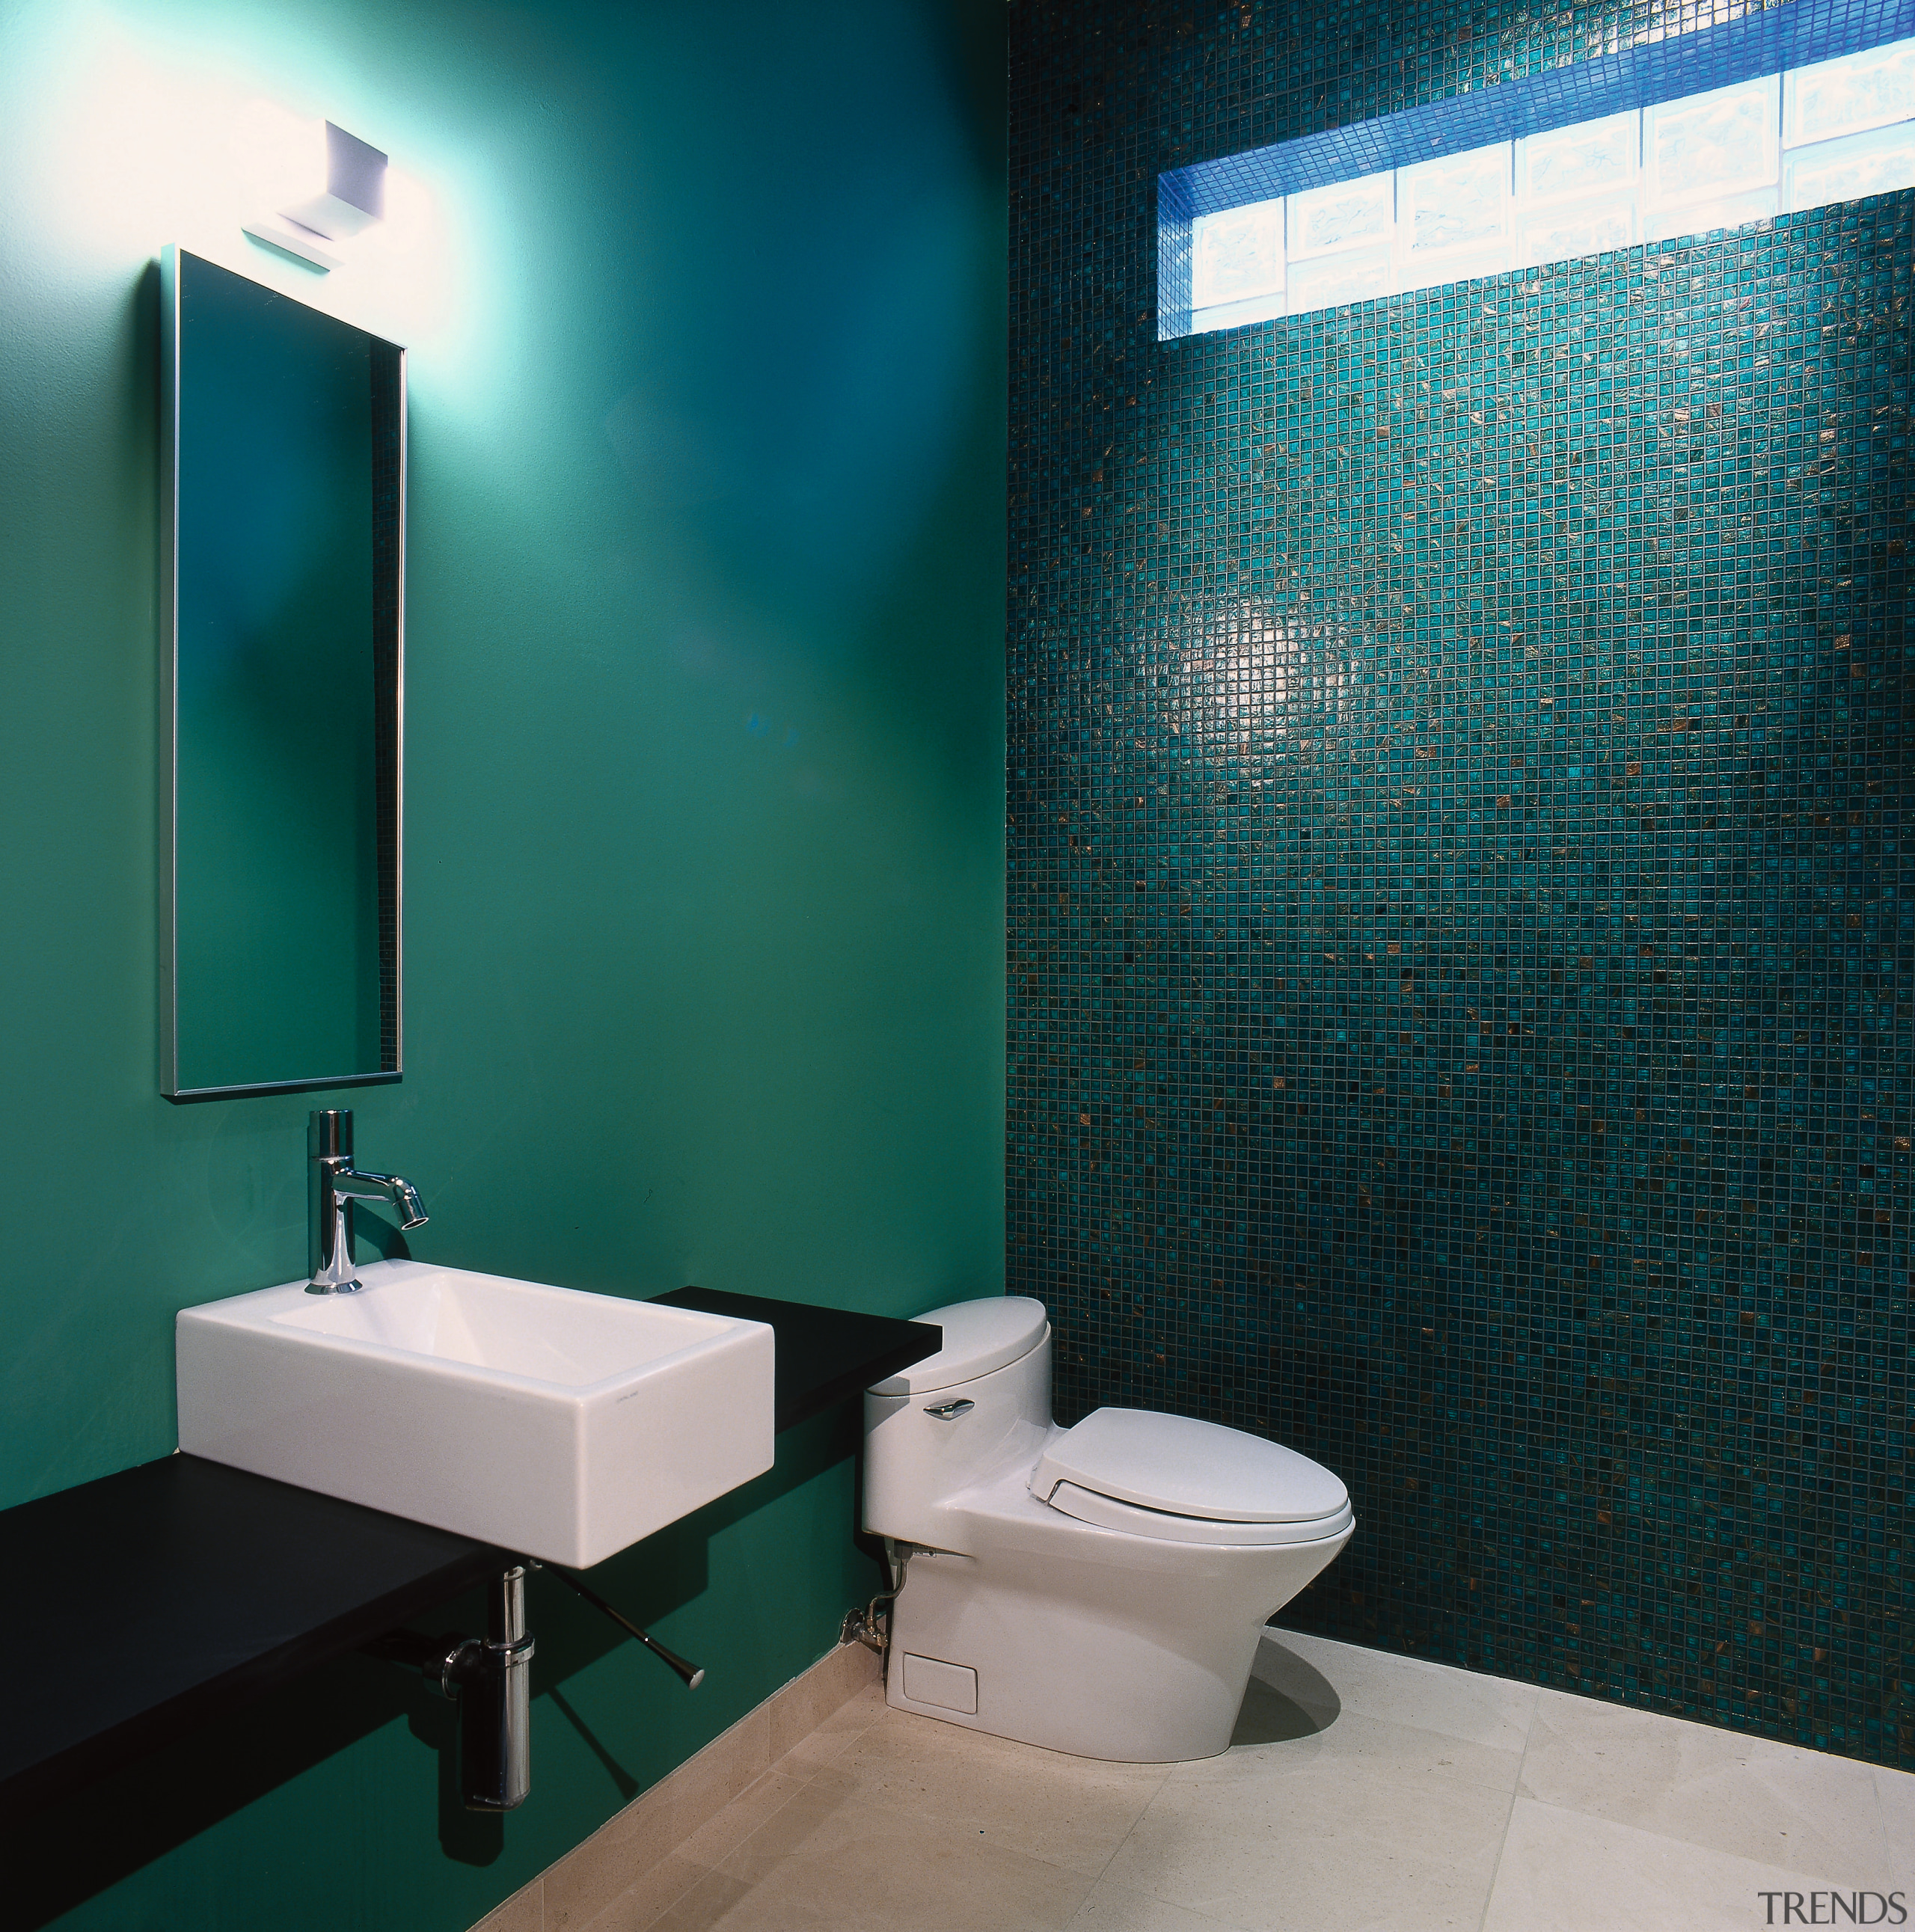 View of this modern bathroom - View of bathroom, blue, floor, glass, interior design, plumbing fixture, product design, public toilet, purple, room, sink, tile, toilet, wall, teal